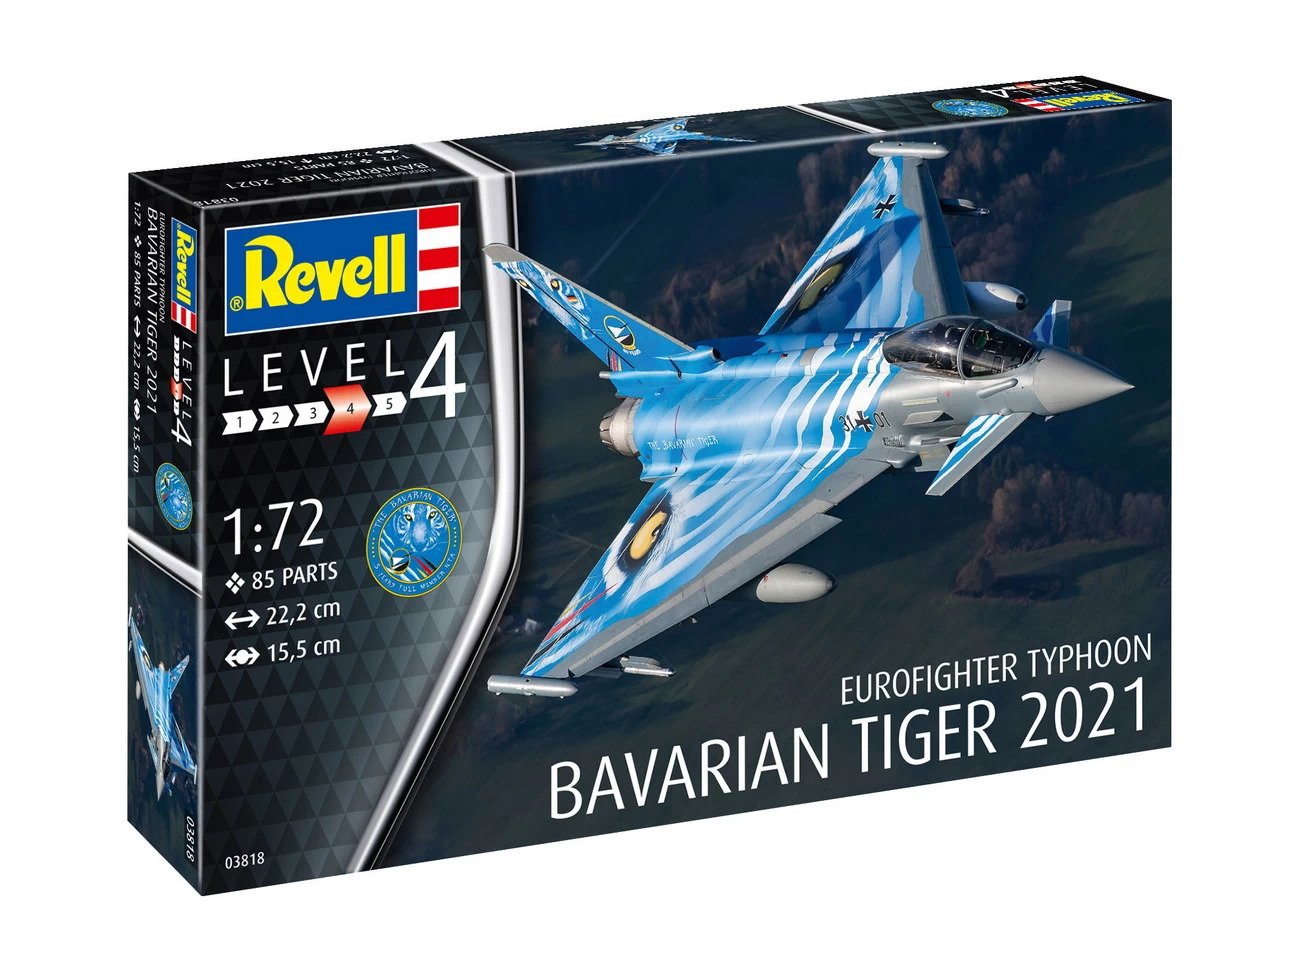 Revell 03818 - Eurofighter Typhoon The Bavarian Tiger 2021 - Flugzeug Modell